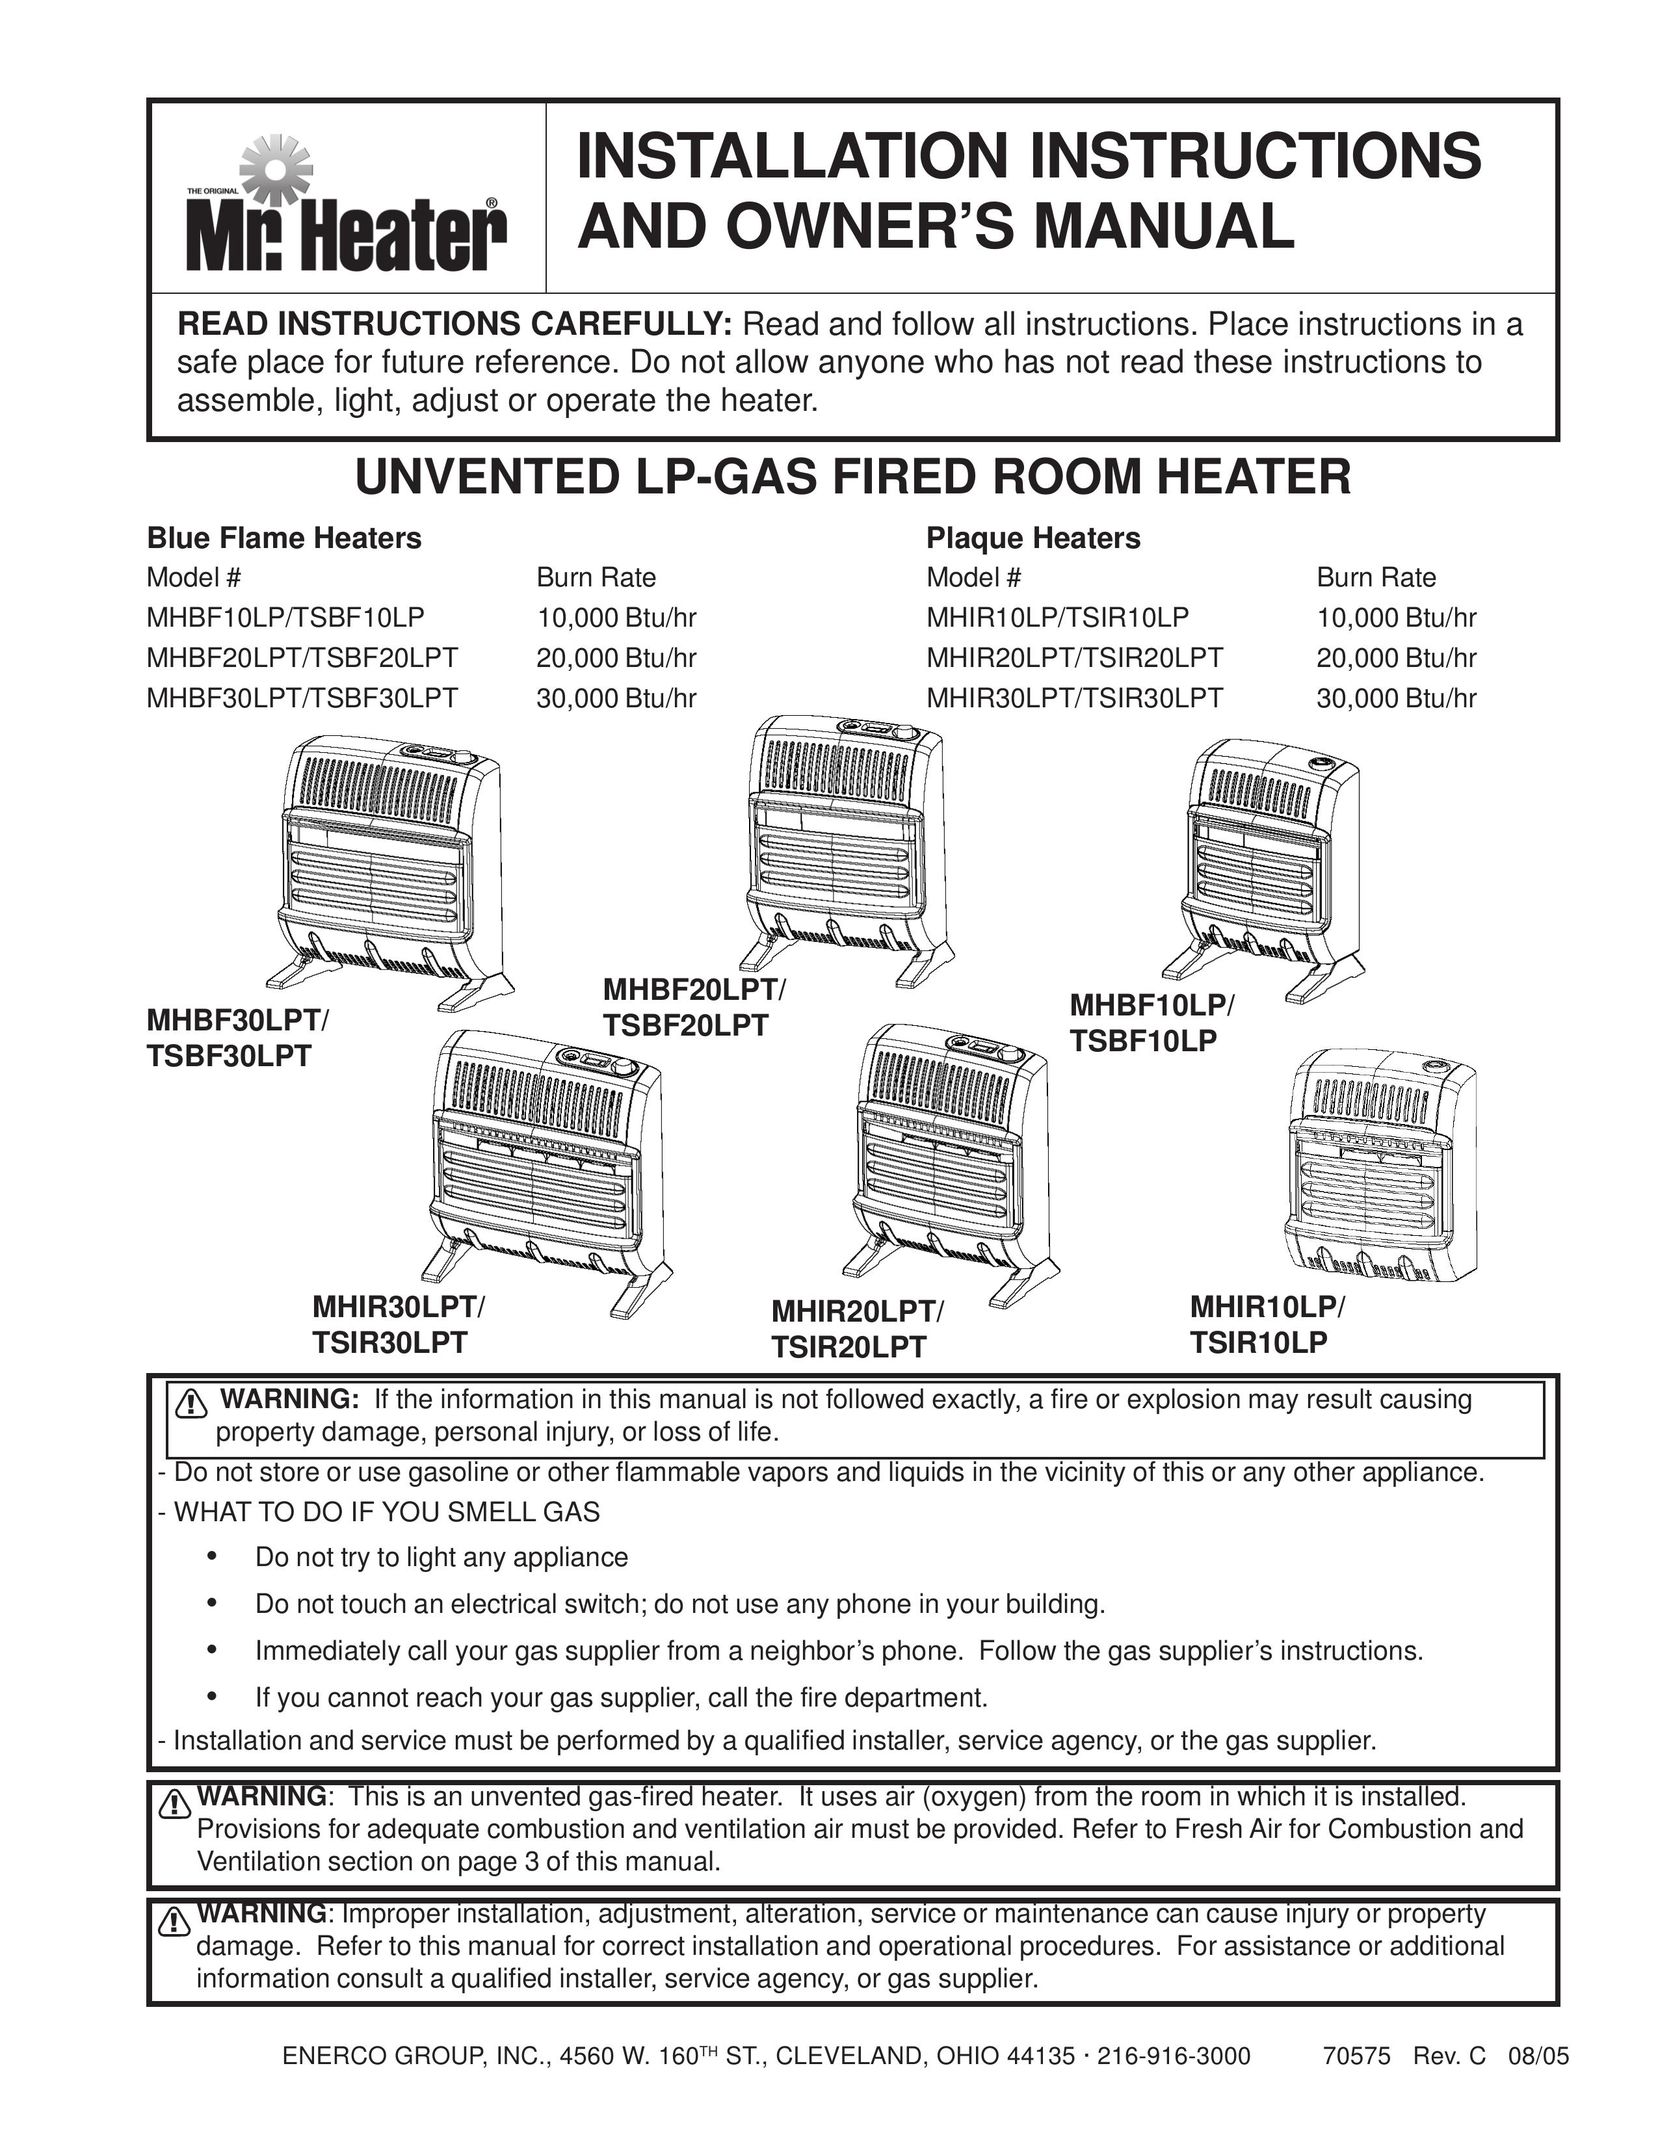 Enerco MHBF30LPT Electric Heater User Manual